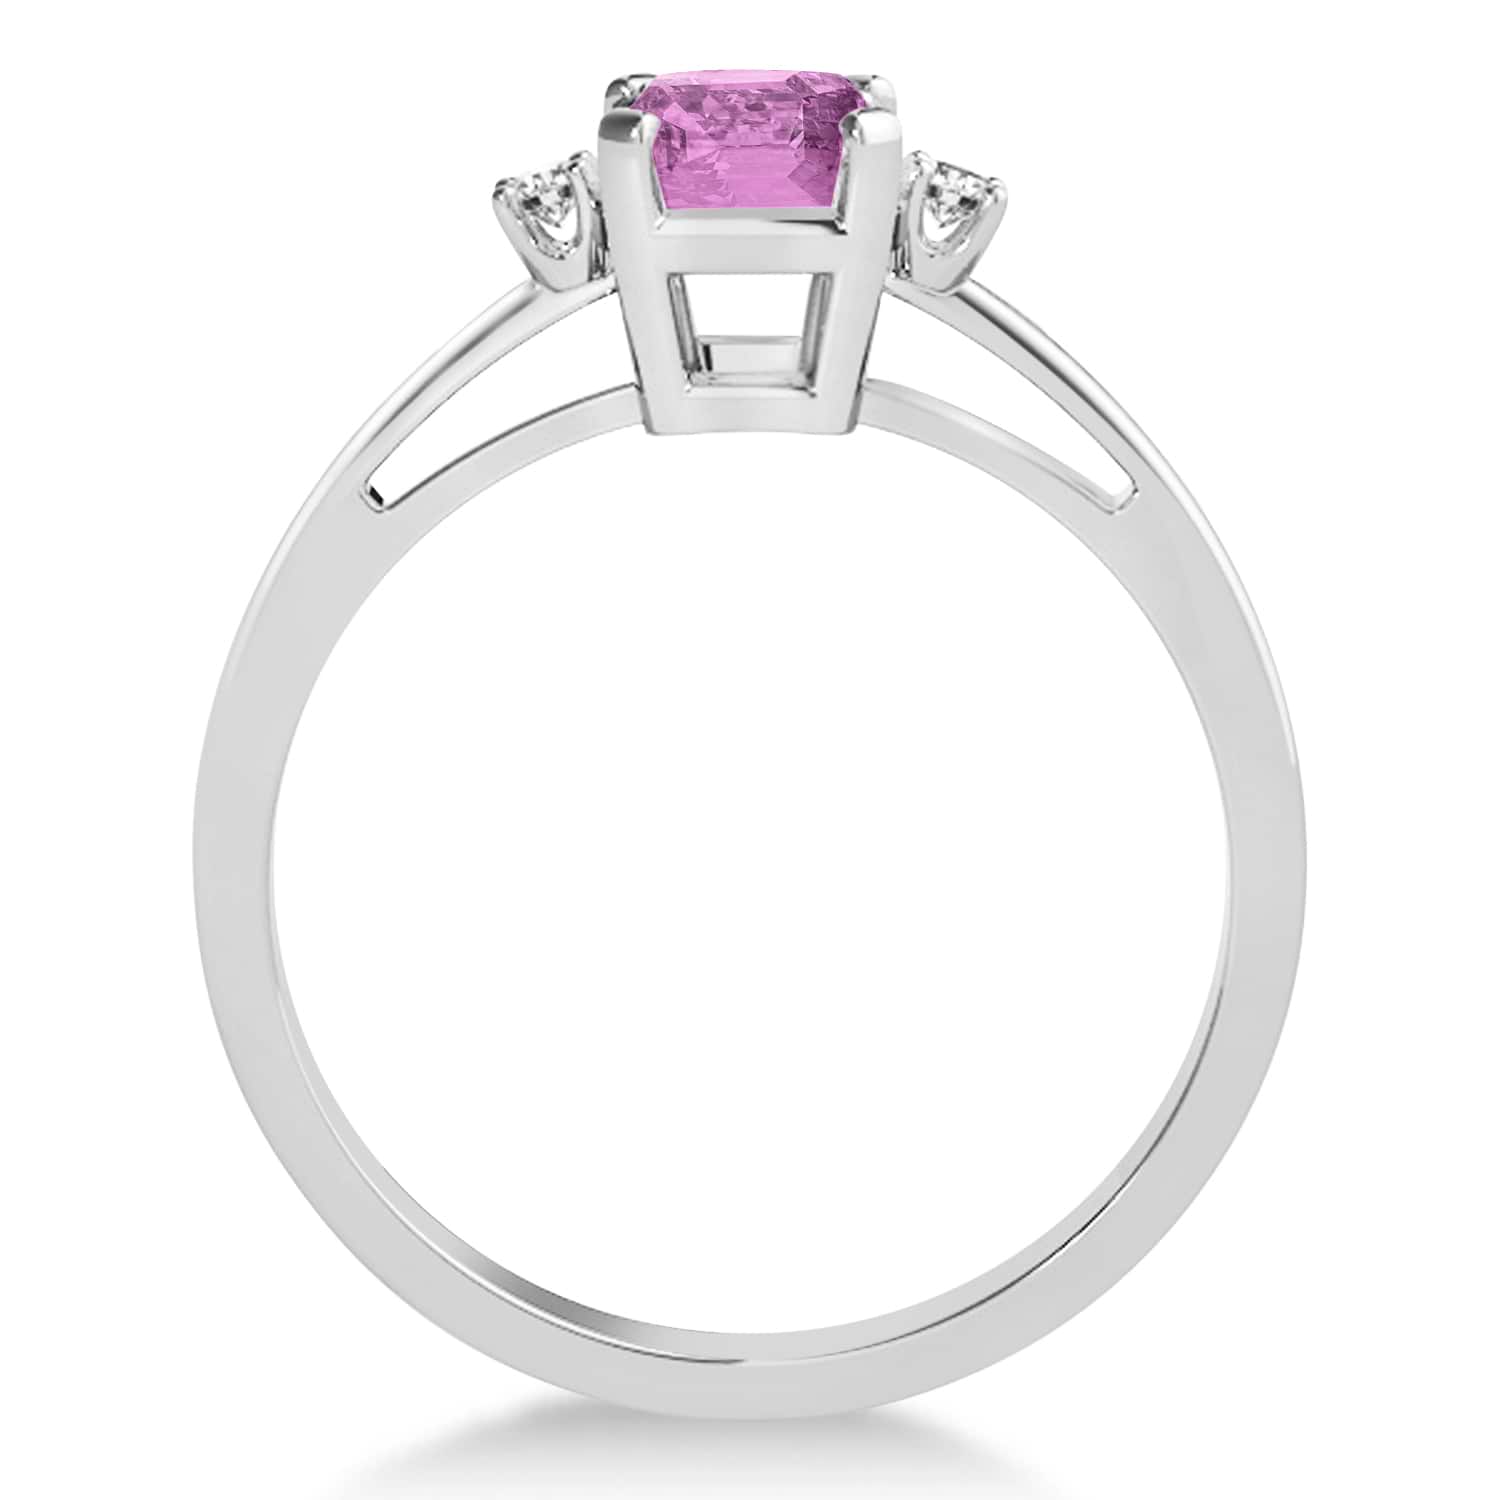 Pink Sapphire Emerald Cut Three-Stone Ring 18k White Gold (1.04ct)